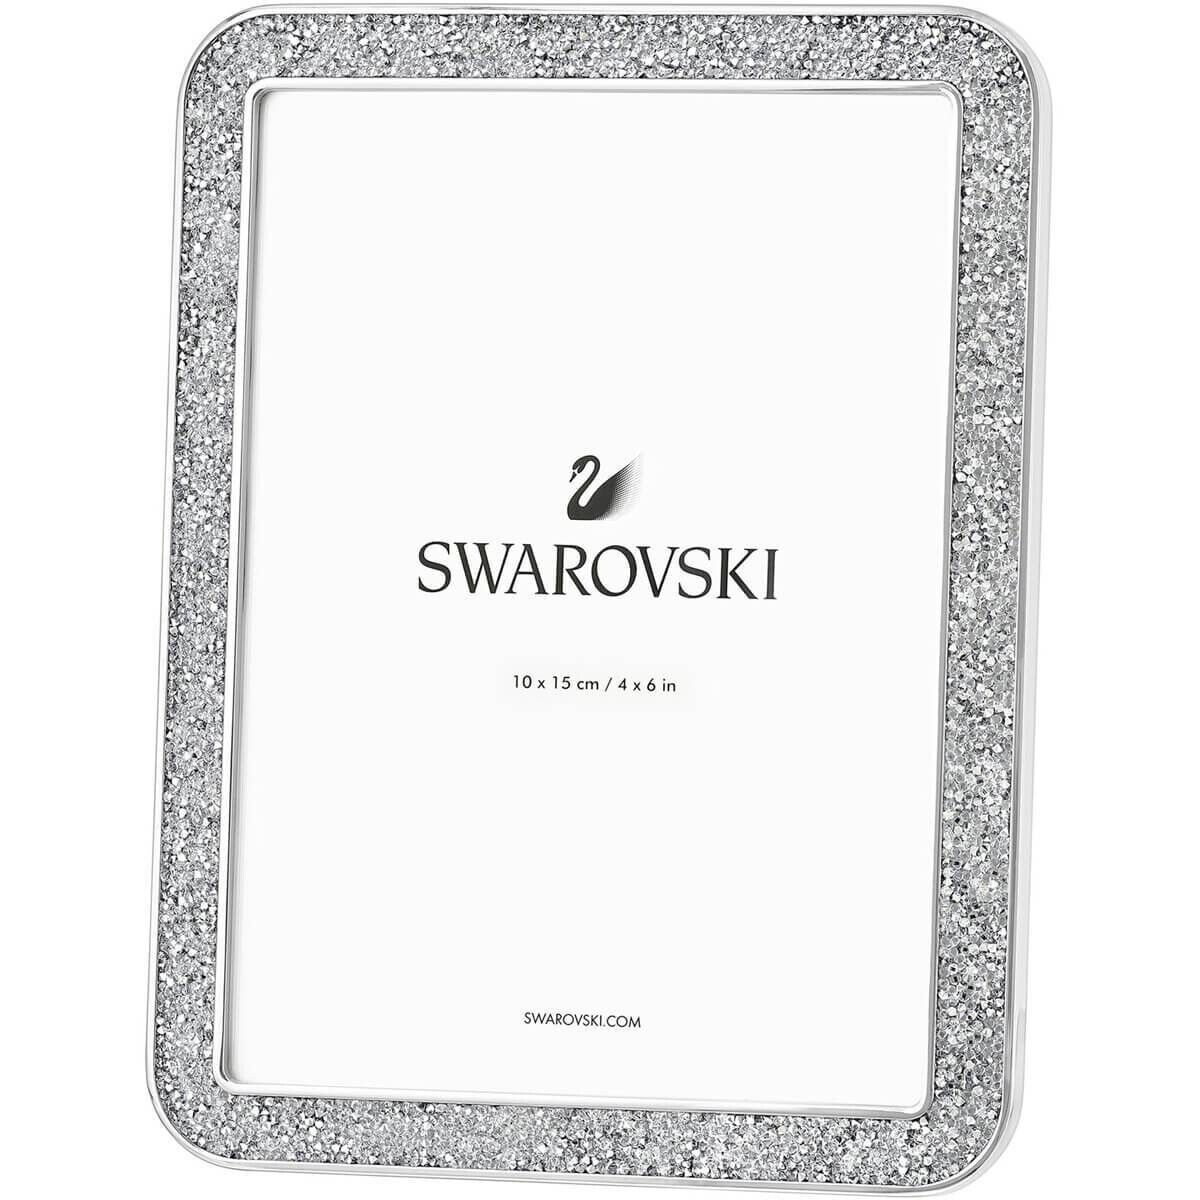 Swarovski Minera Rectangular Picture Frame Silver Tone Fits 5x7 Pic - 5351296